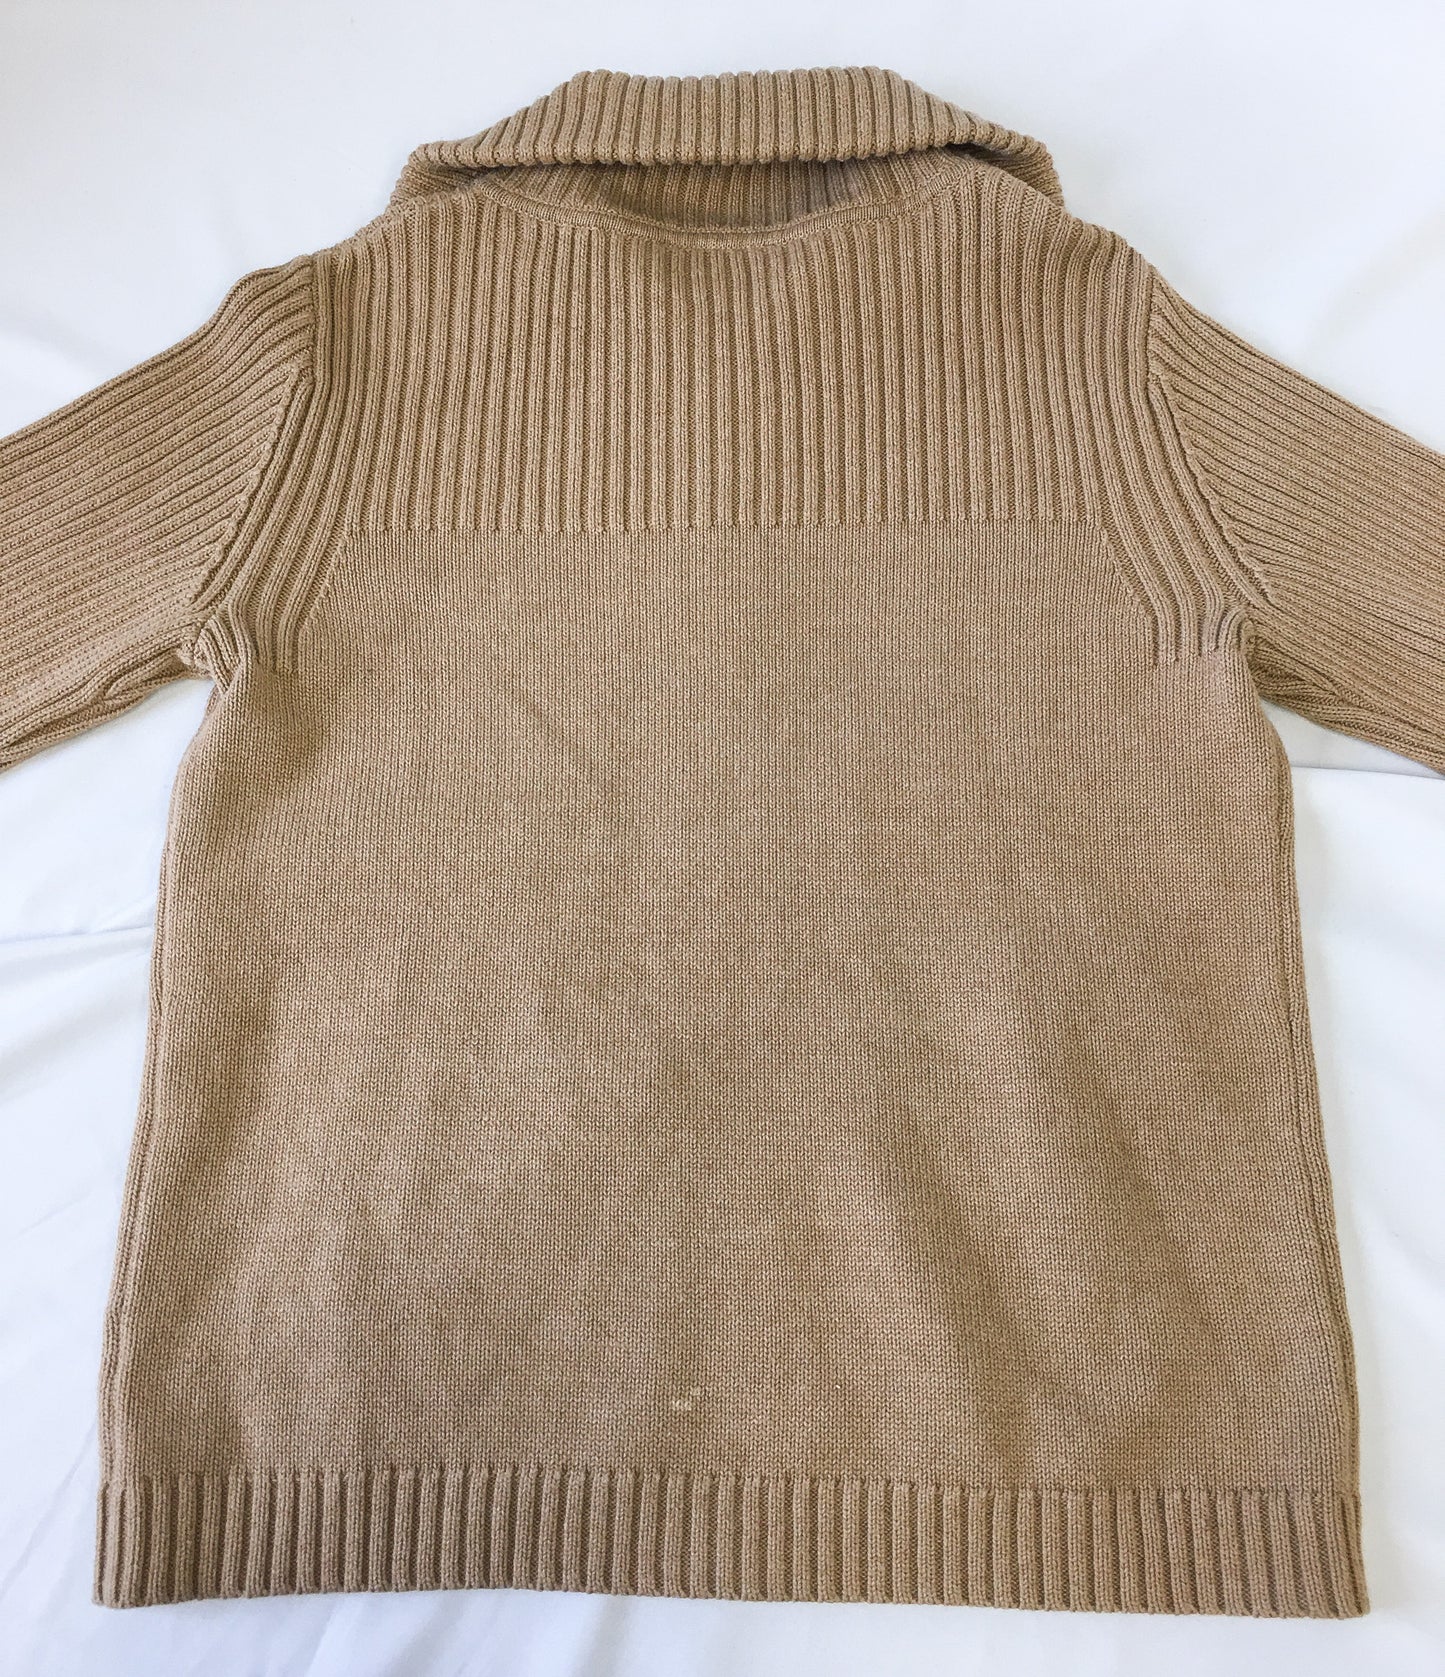 Pendleton Tan/Light Brown Knit Full-Zip Sweater, Sz. S